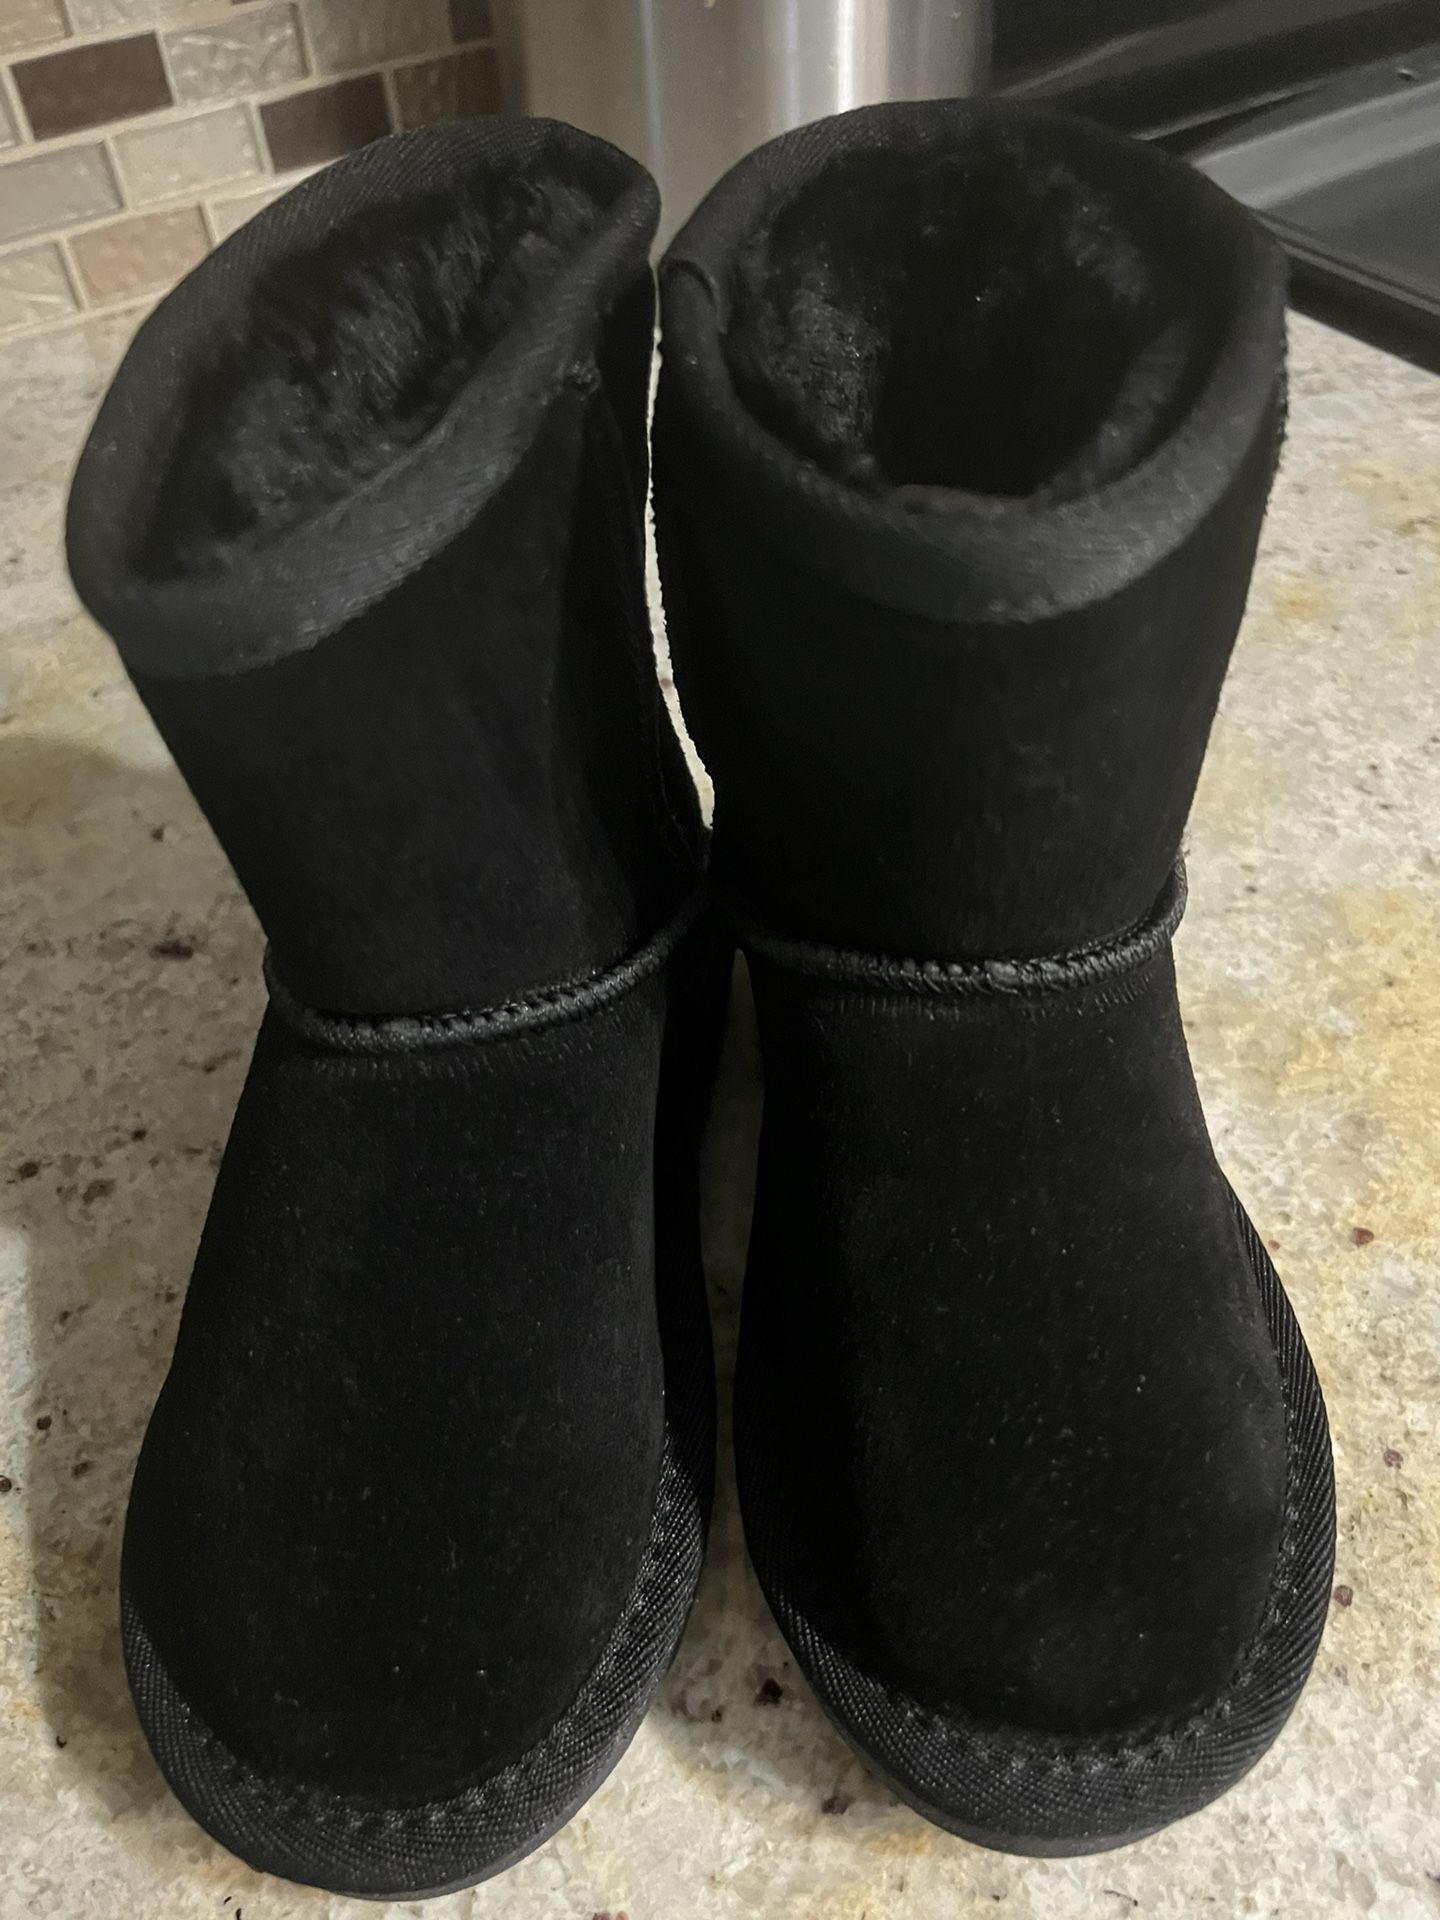 NEW Girls Winter Boots - Warm Fur Lining - Size 10